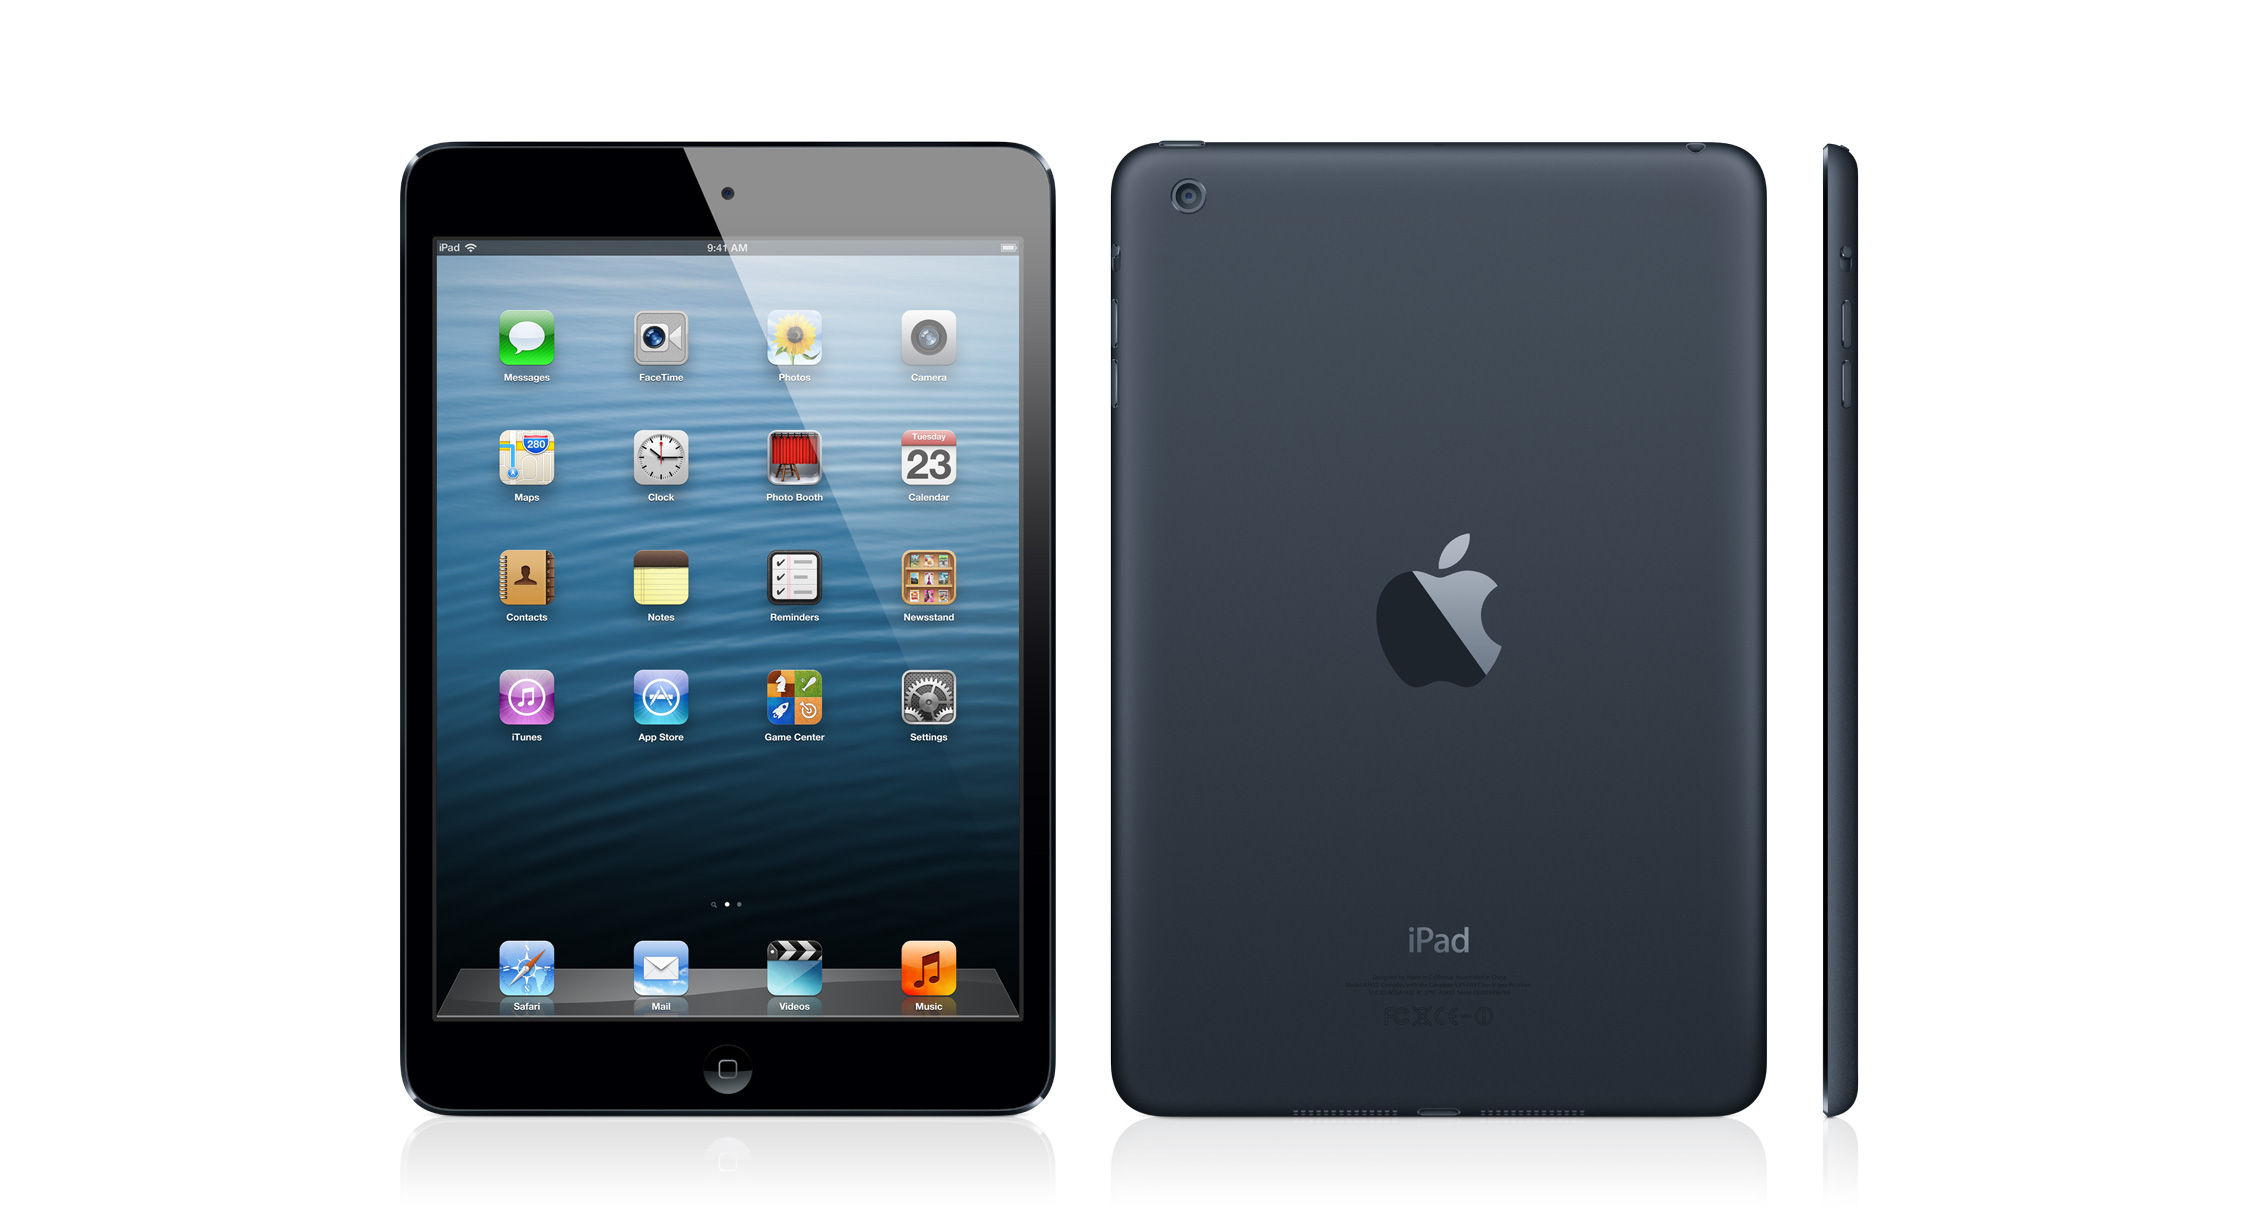 Apple Introduces the iPad mini and Fourth-Generation iPad - TidBITS